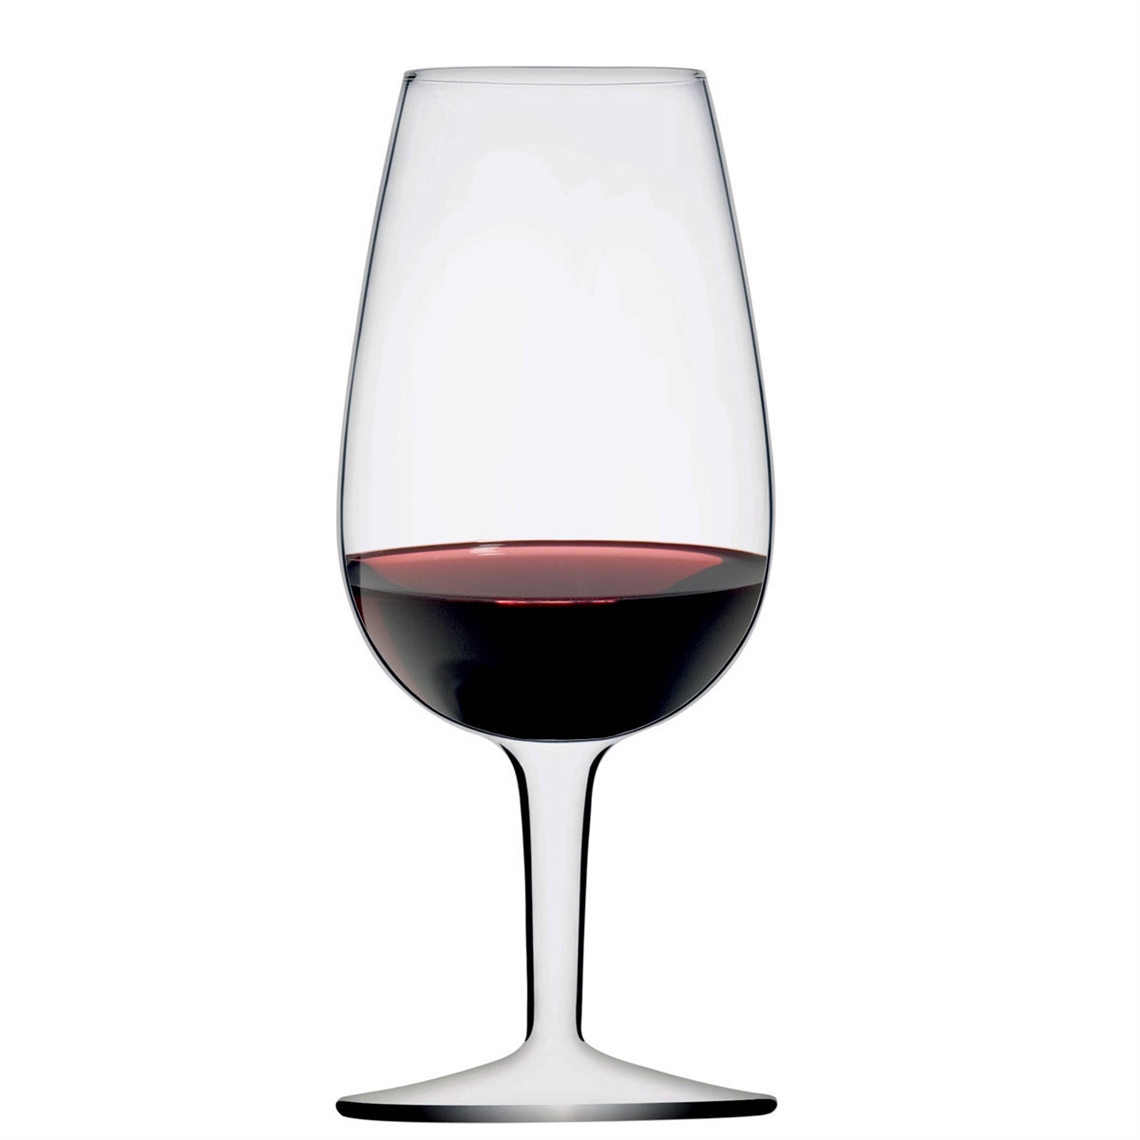 View more restaurant glasses - schott zwiesel from our Wine Tasting Glasses range